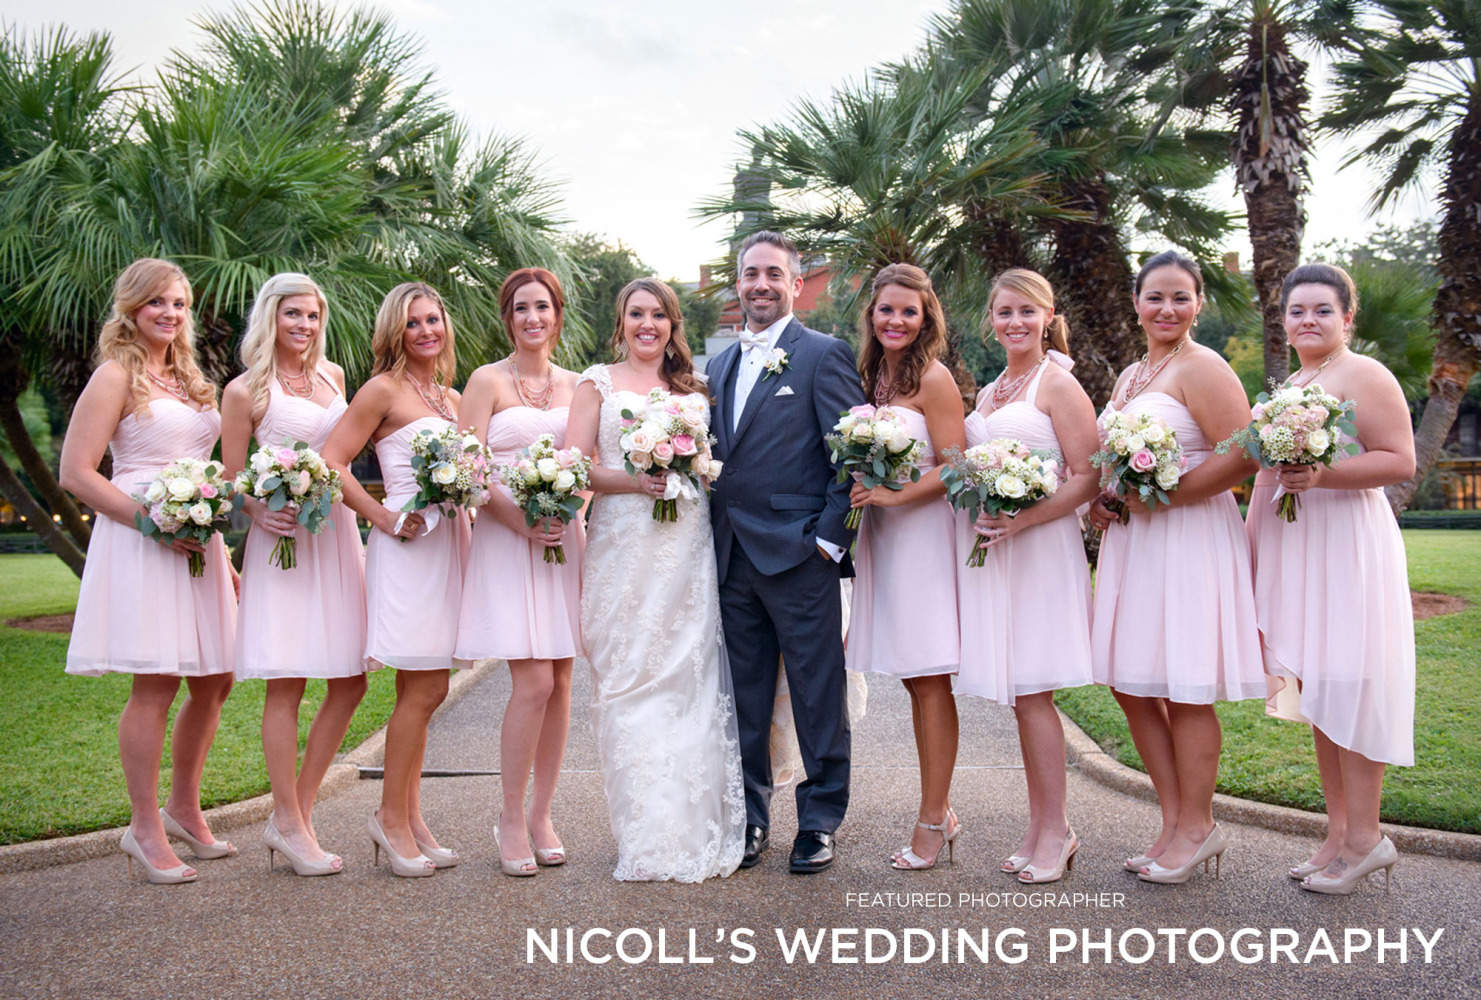 Nicoll's Wedding Photography - Featured Photographer